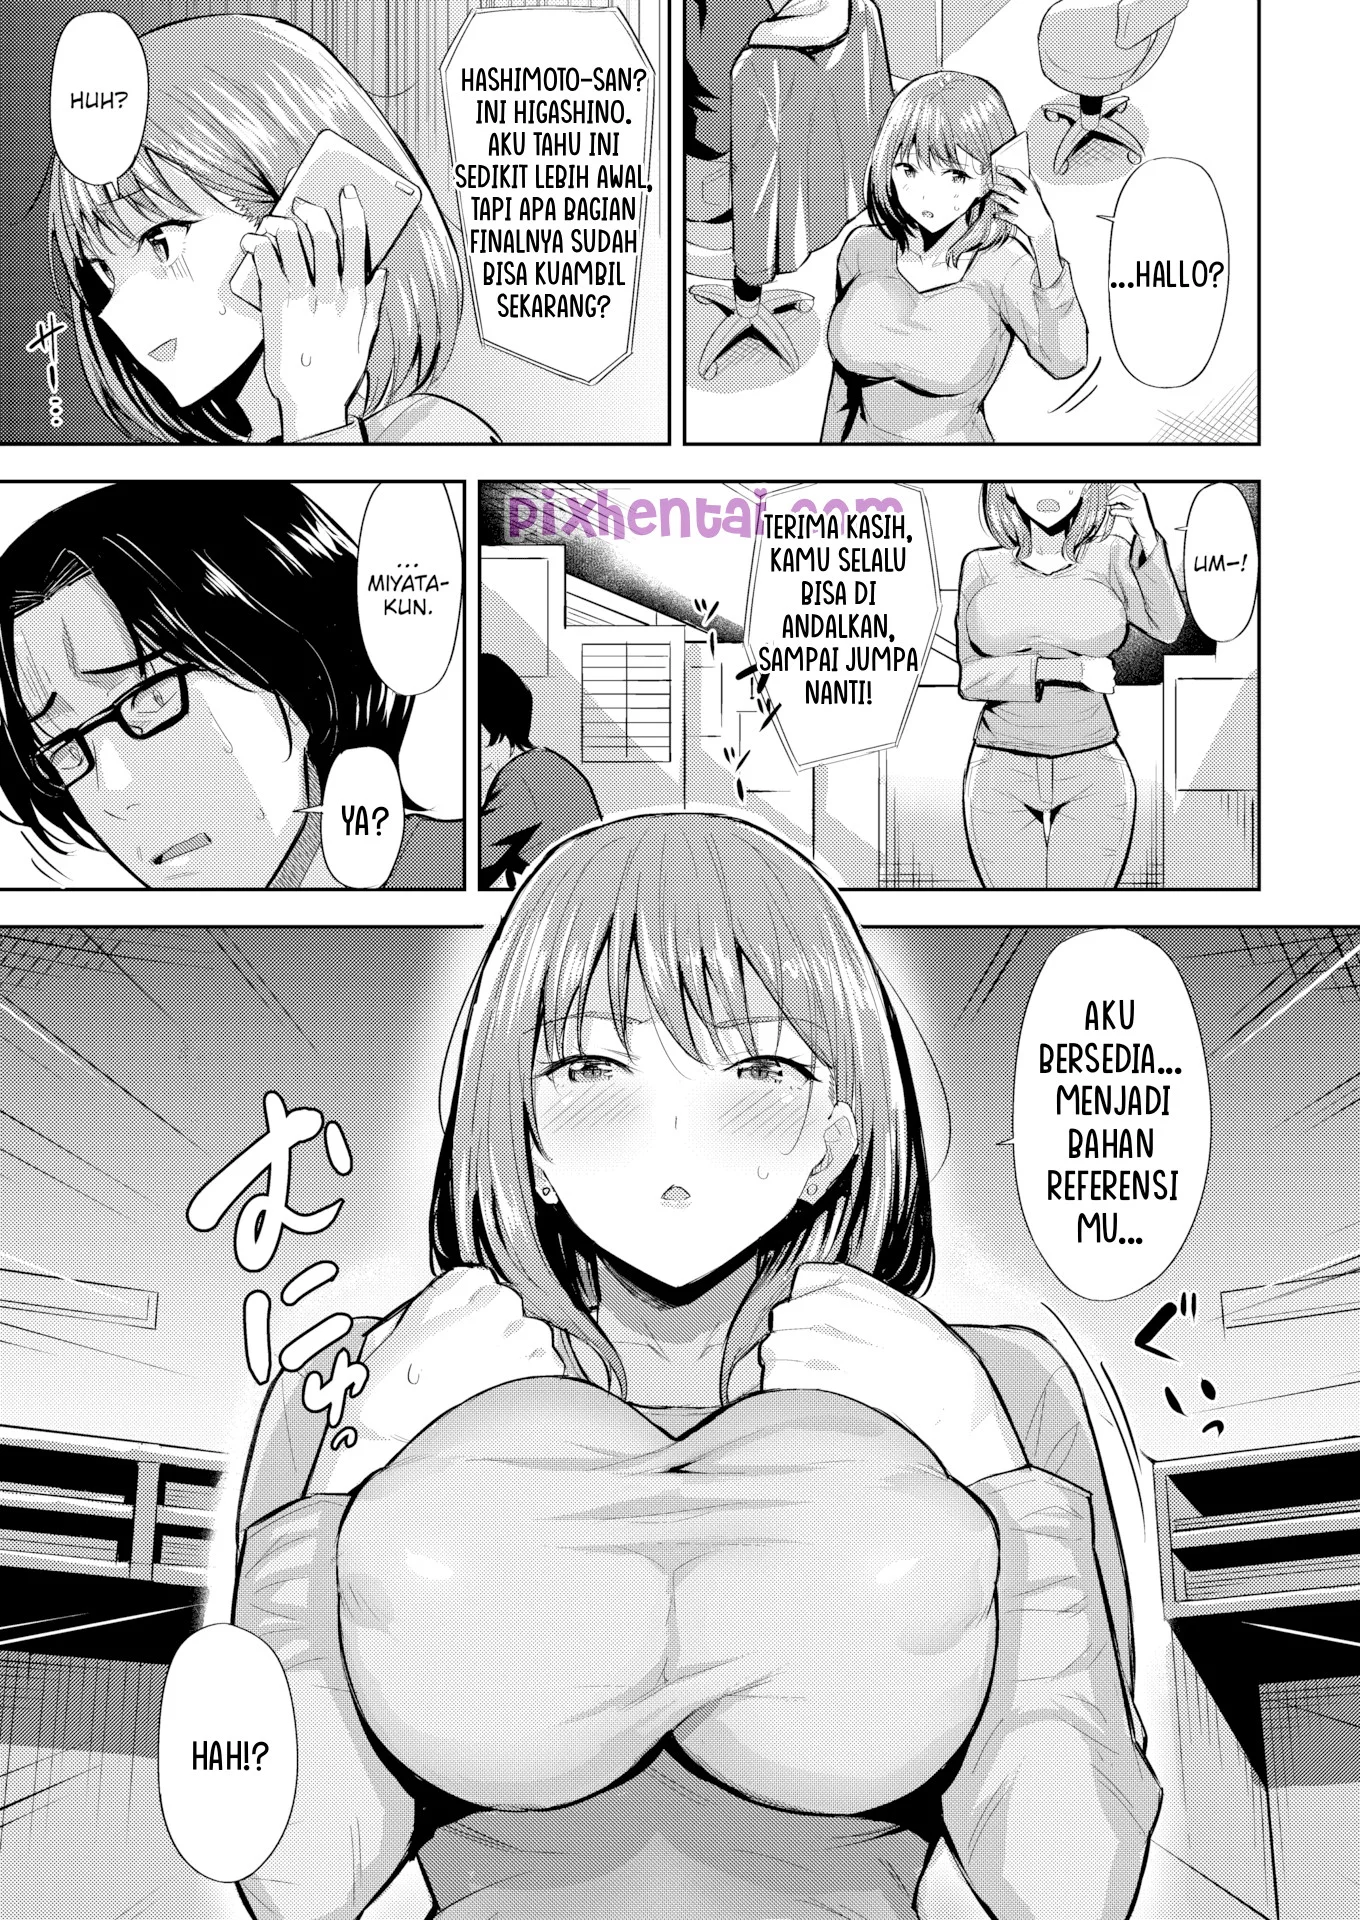 Komik hentai xxx manga sex bokep Susuku Jadi Bahan Referensi Animator 5